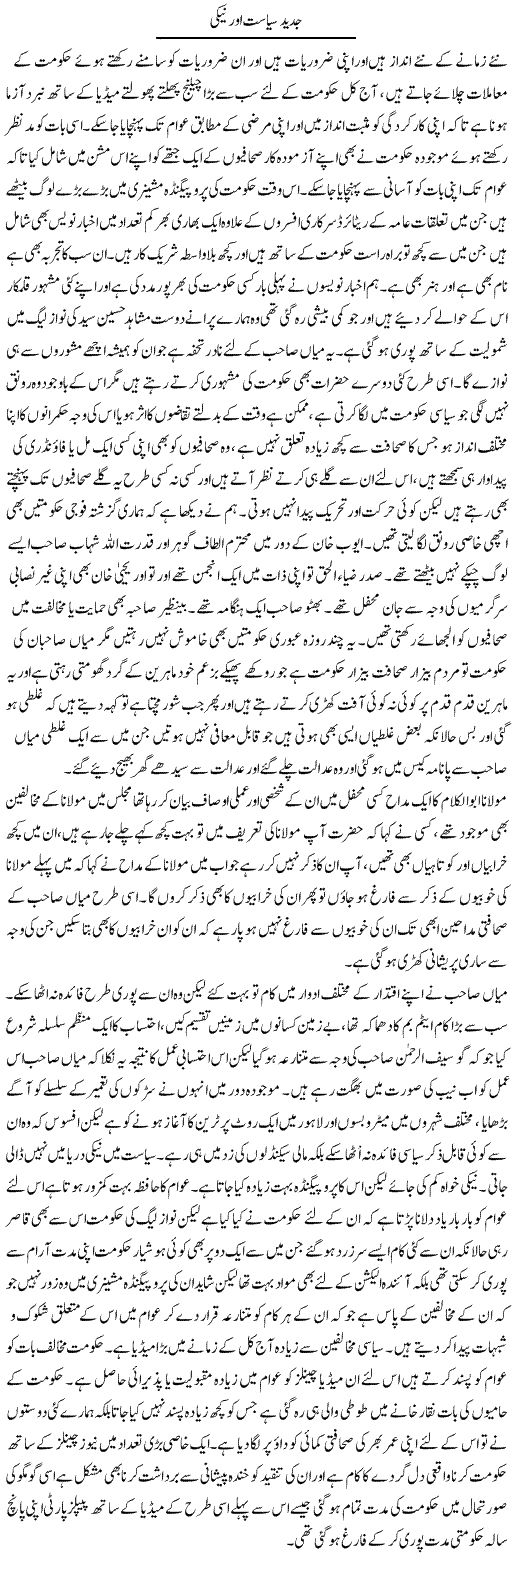 Jadeed Siasat Aur Neki | Abdul Qadir Hassan | Daily Urdu Columns